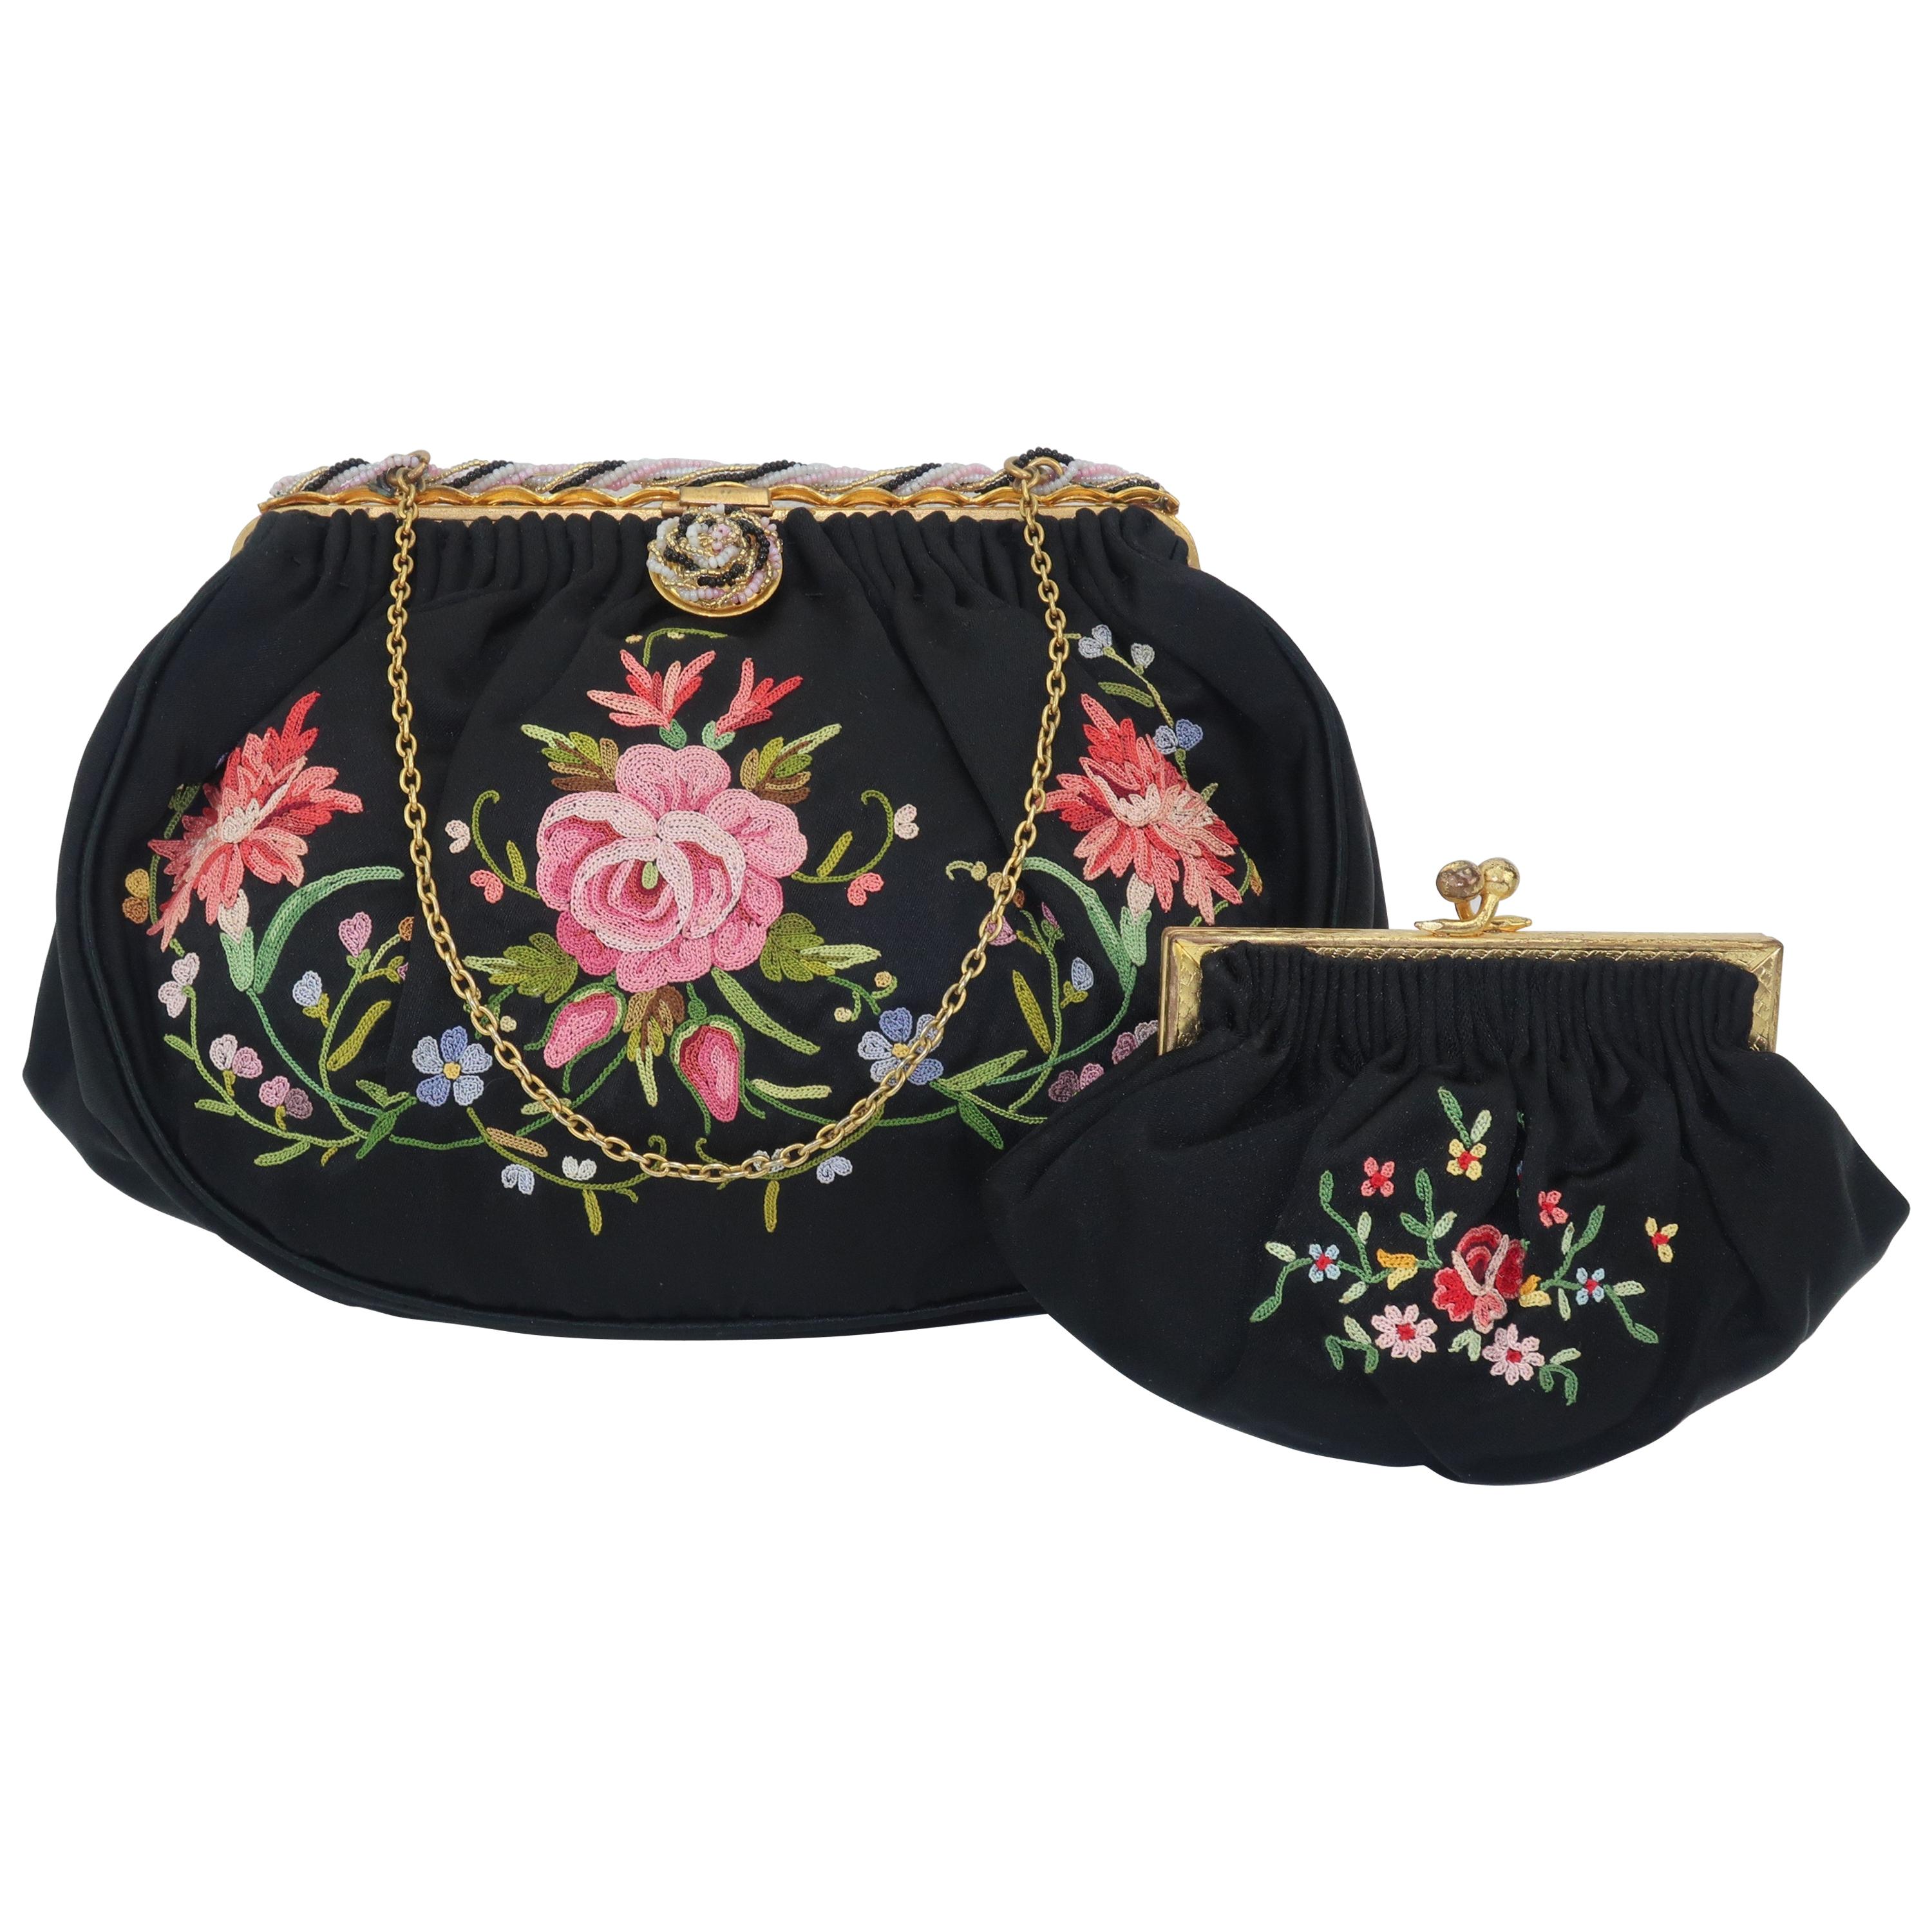 French C.1950 Black Satin Embroidered Handbag With Change Purse